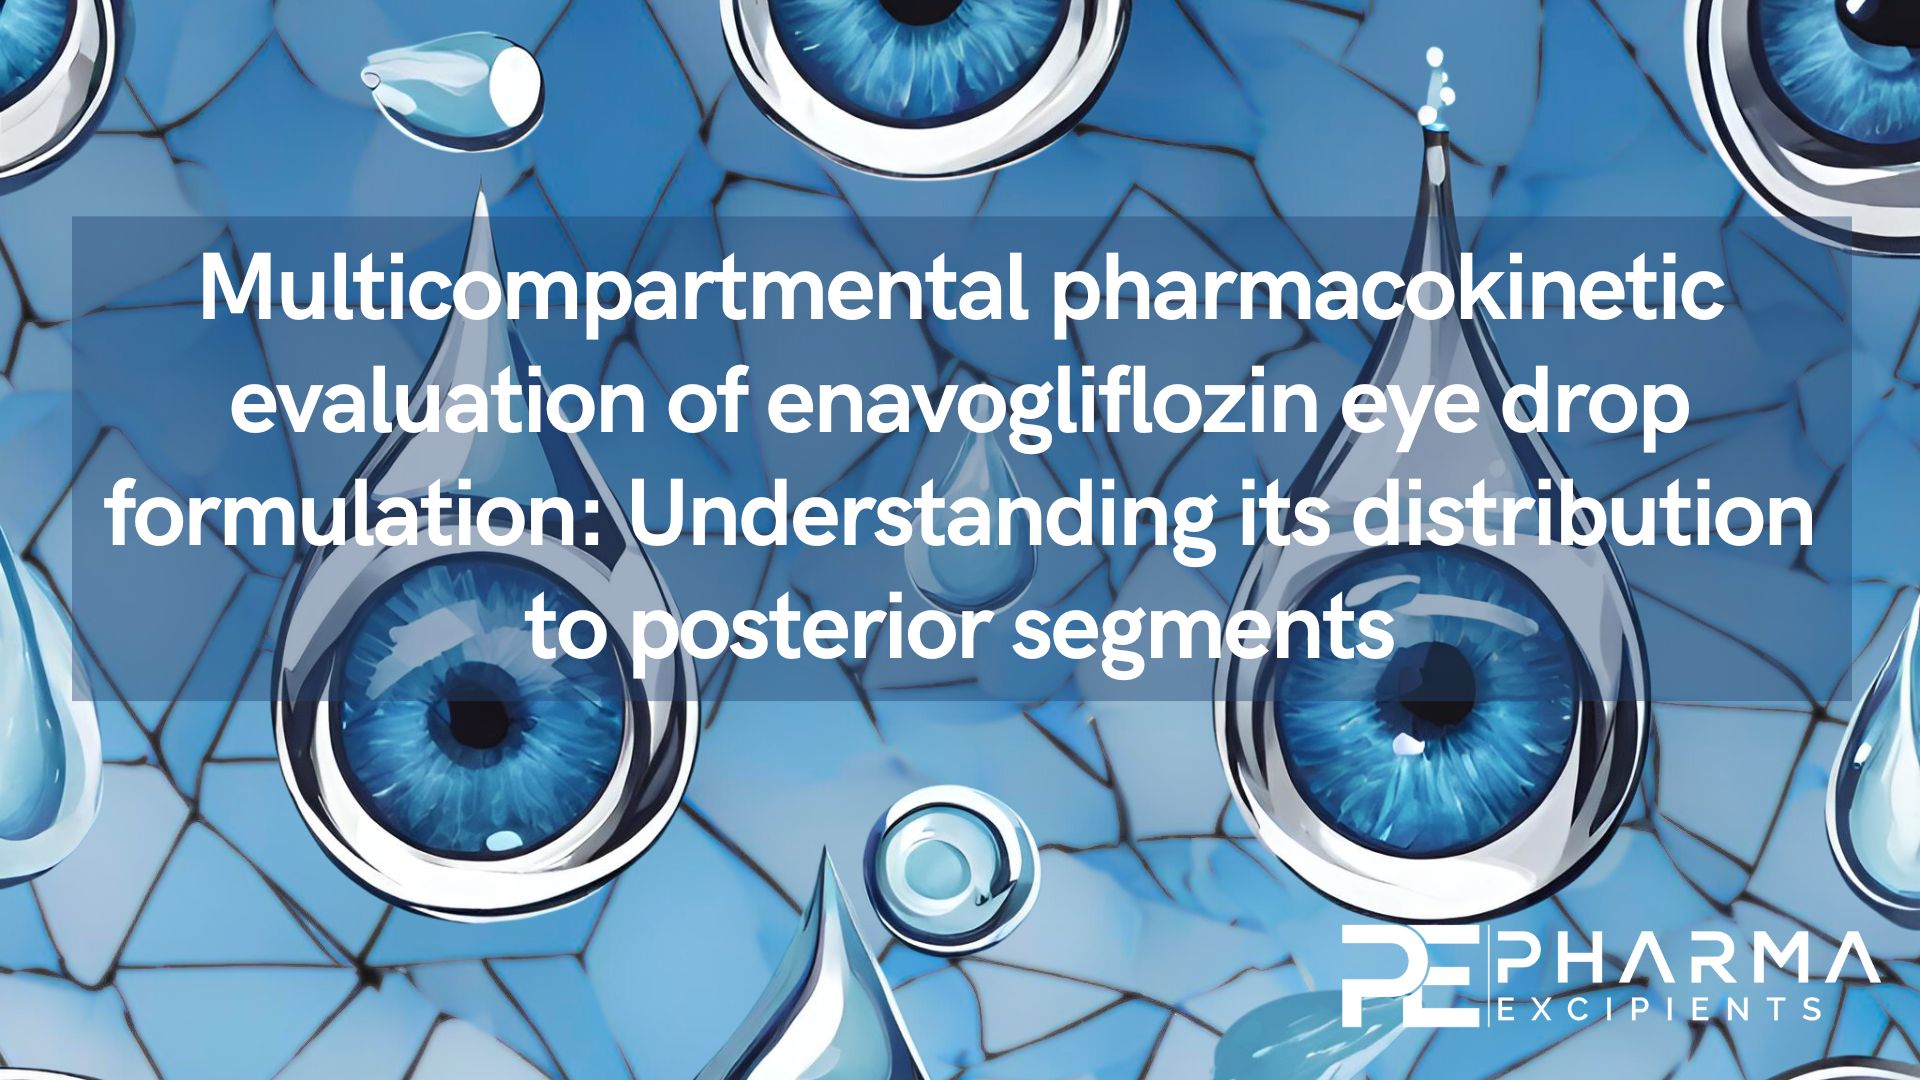 Multicompartmental pharmacokinetic evaluation of enavogliflozin eye drop formulation